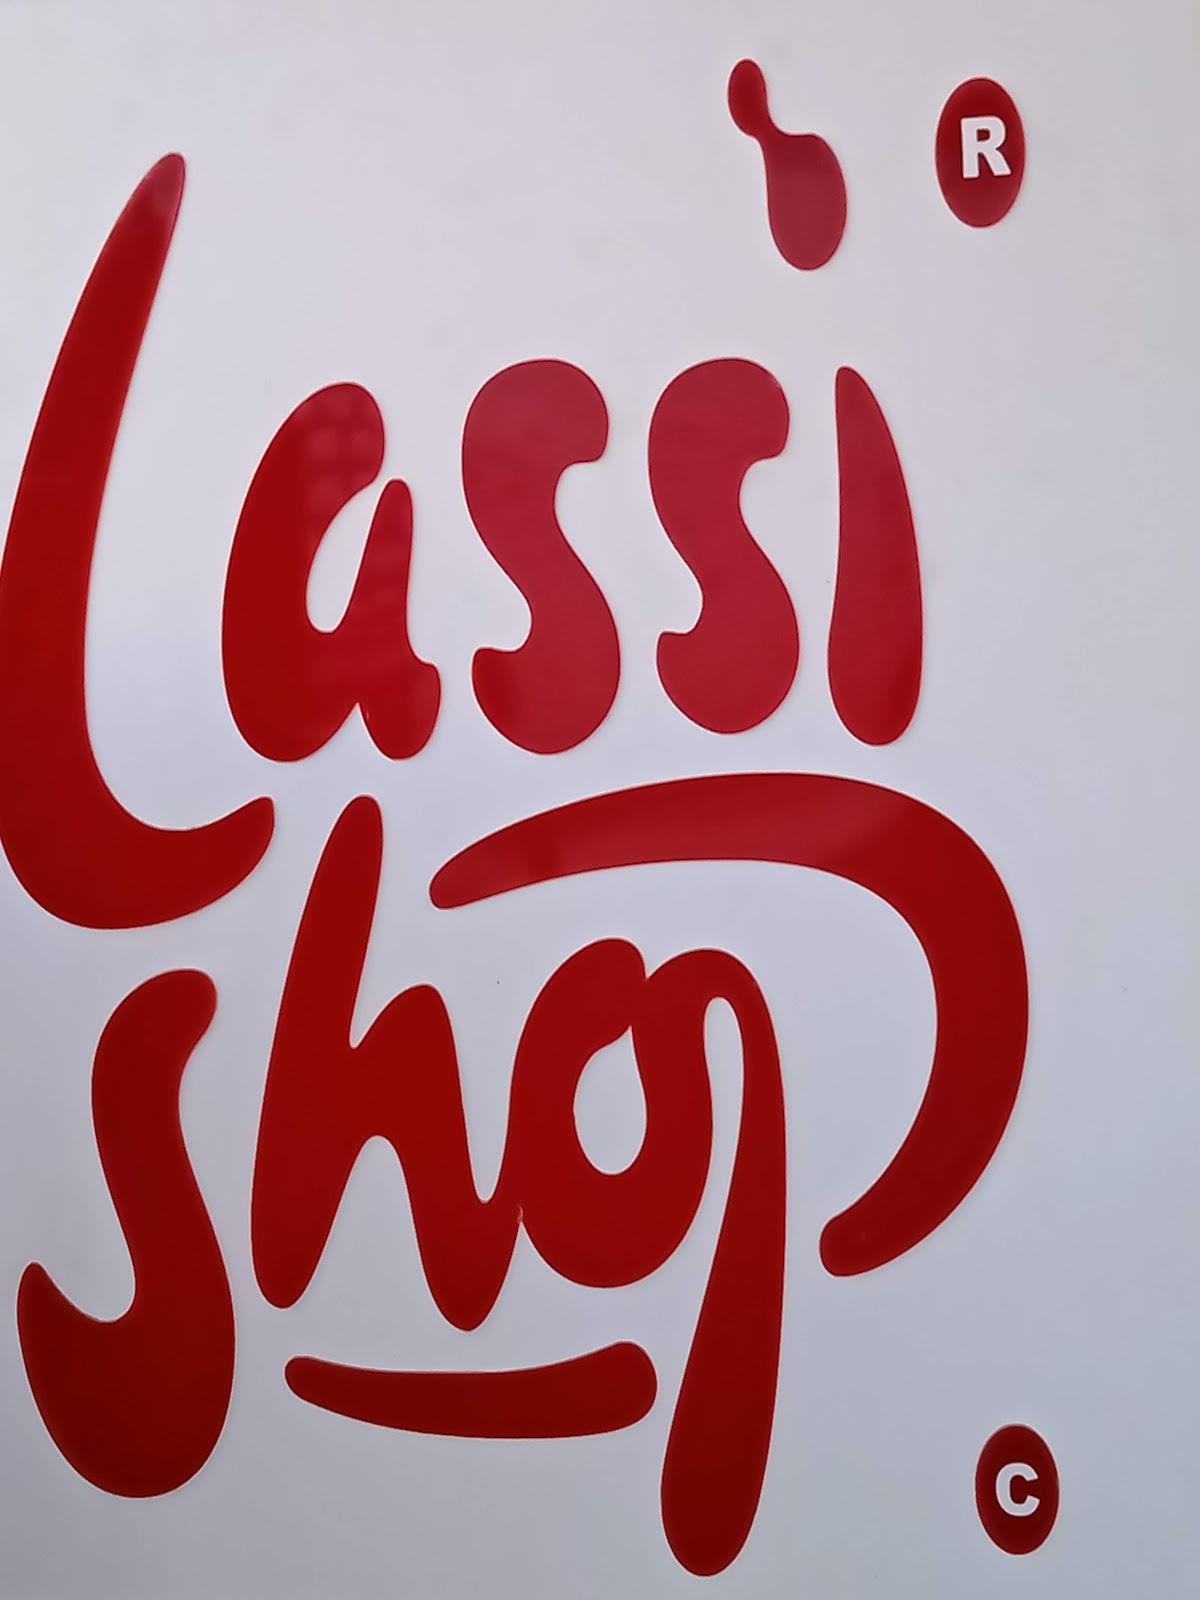 Lassi Shop - BTM Layout | Updates, Photos, Videos